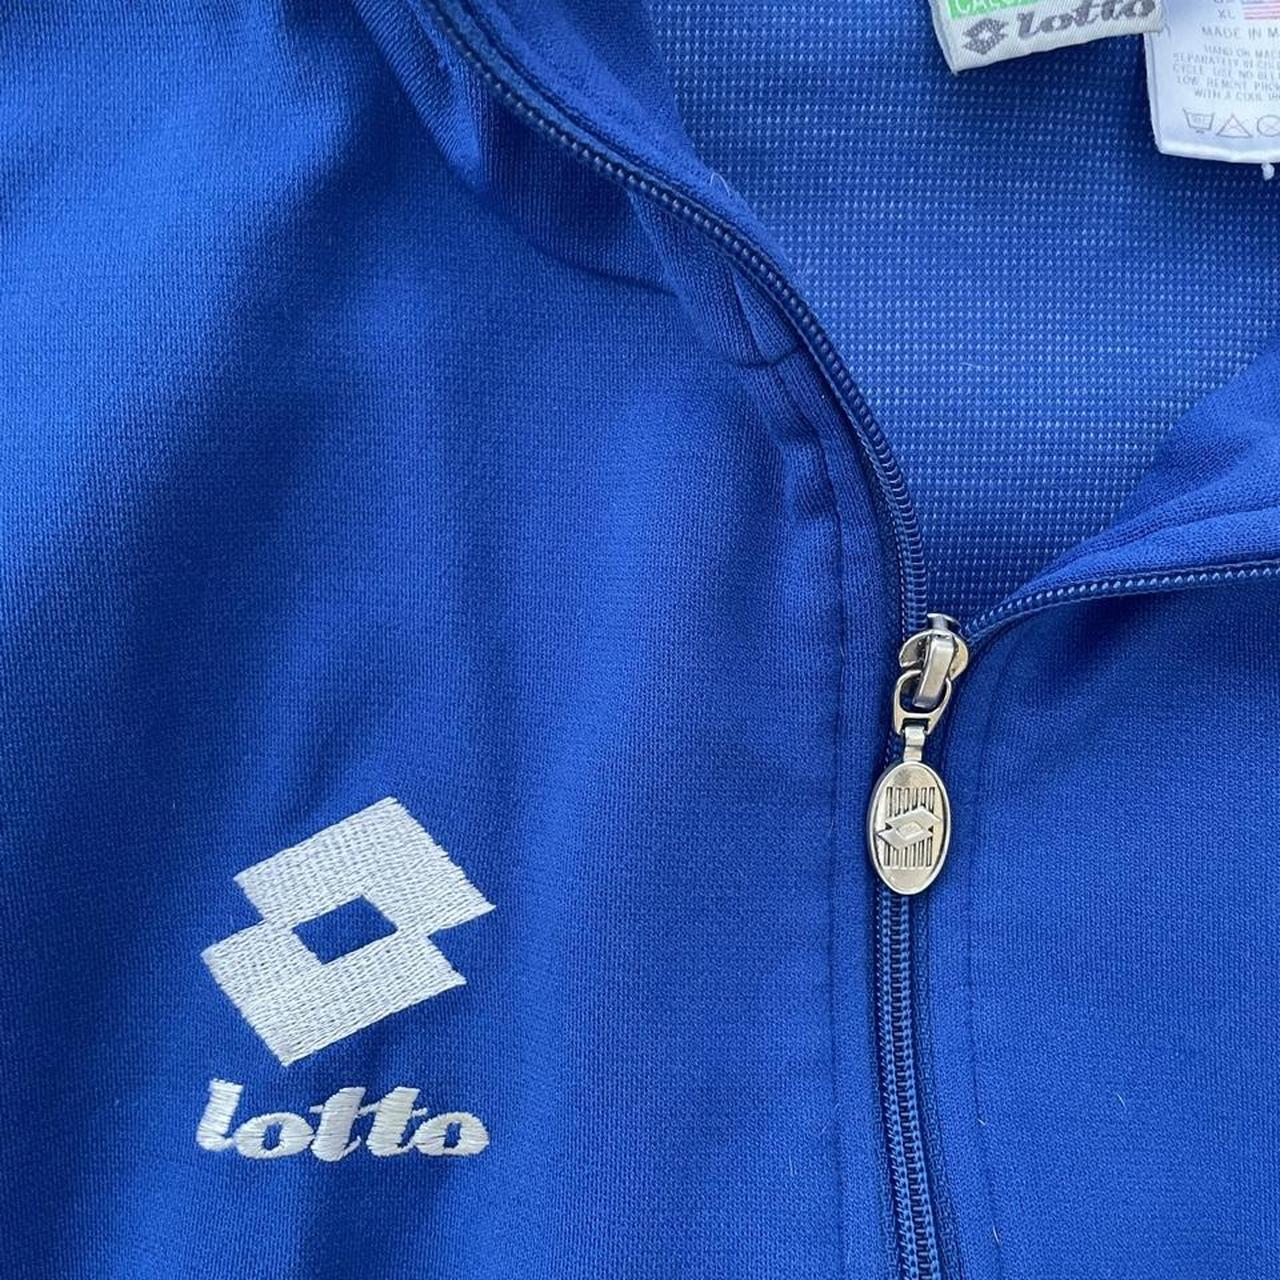 Lotto Men's Blue Jacket (3)